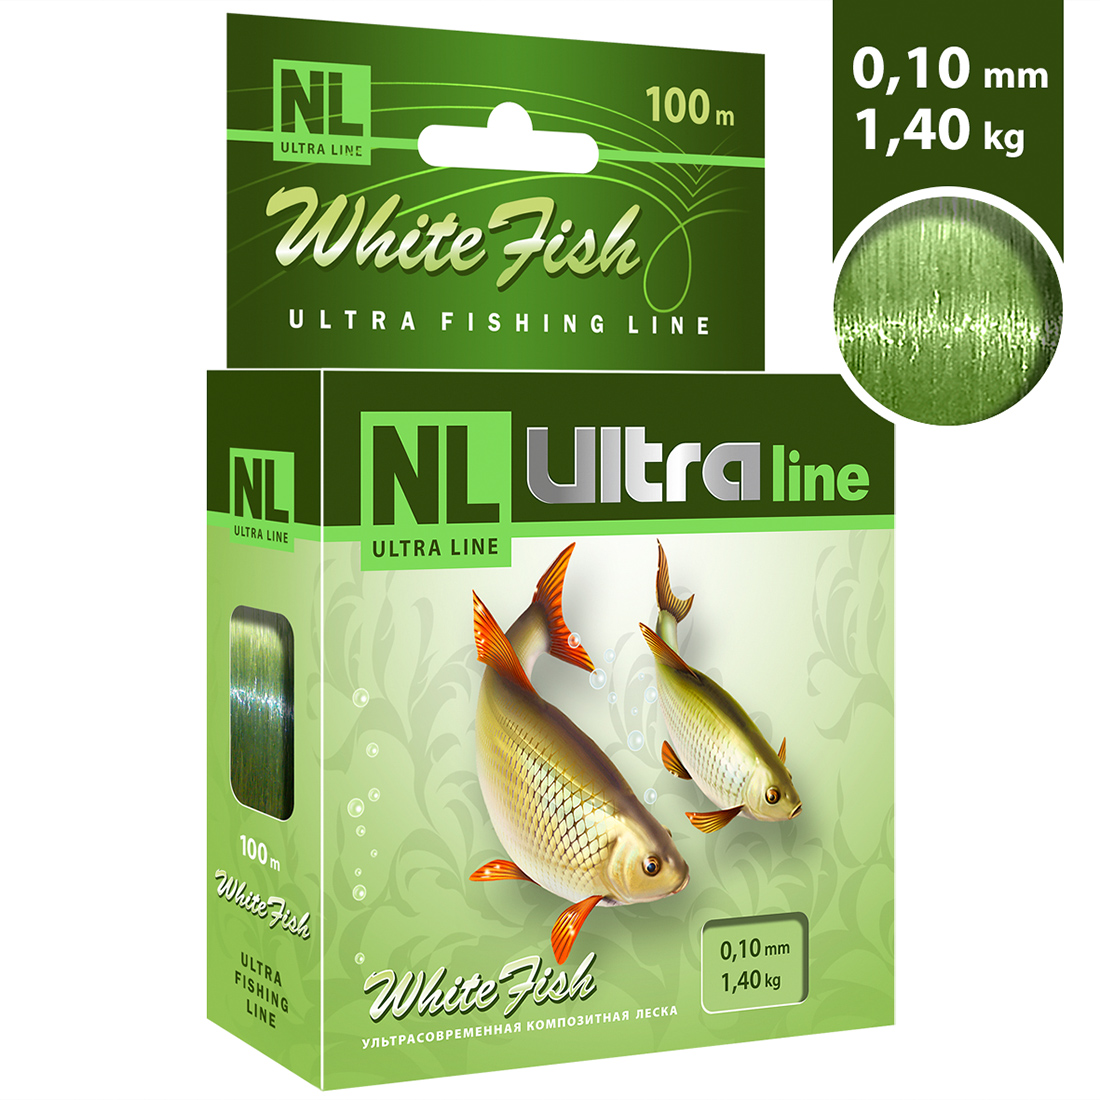 Леска AQUA NL ULTRA WHITE FISH (Белая рыба) 100m 0,10mm, светло-зеленая, test - 1,40kg